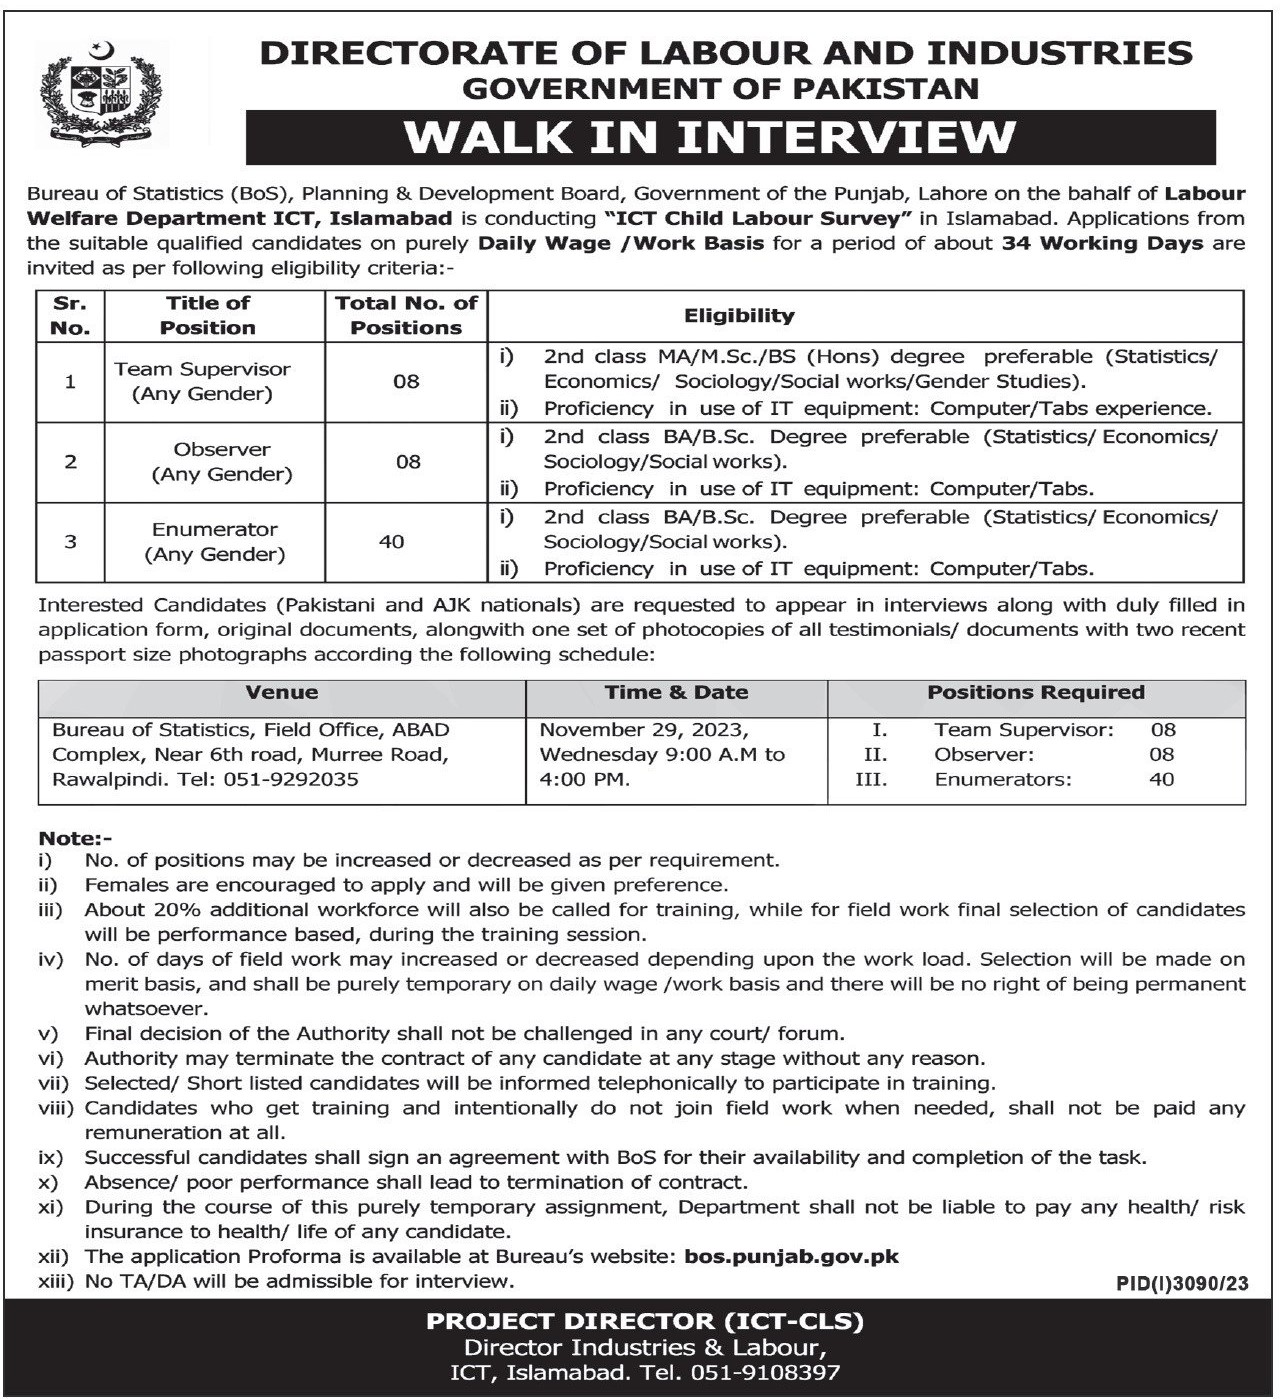 Directorate of Labour and Industries Govt of Pakistan Vacancies 2023